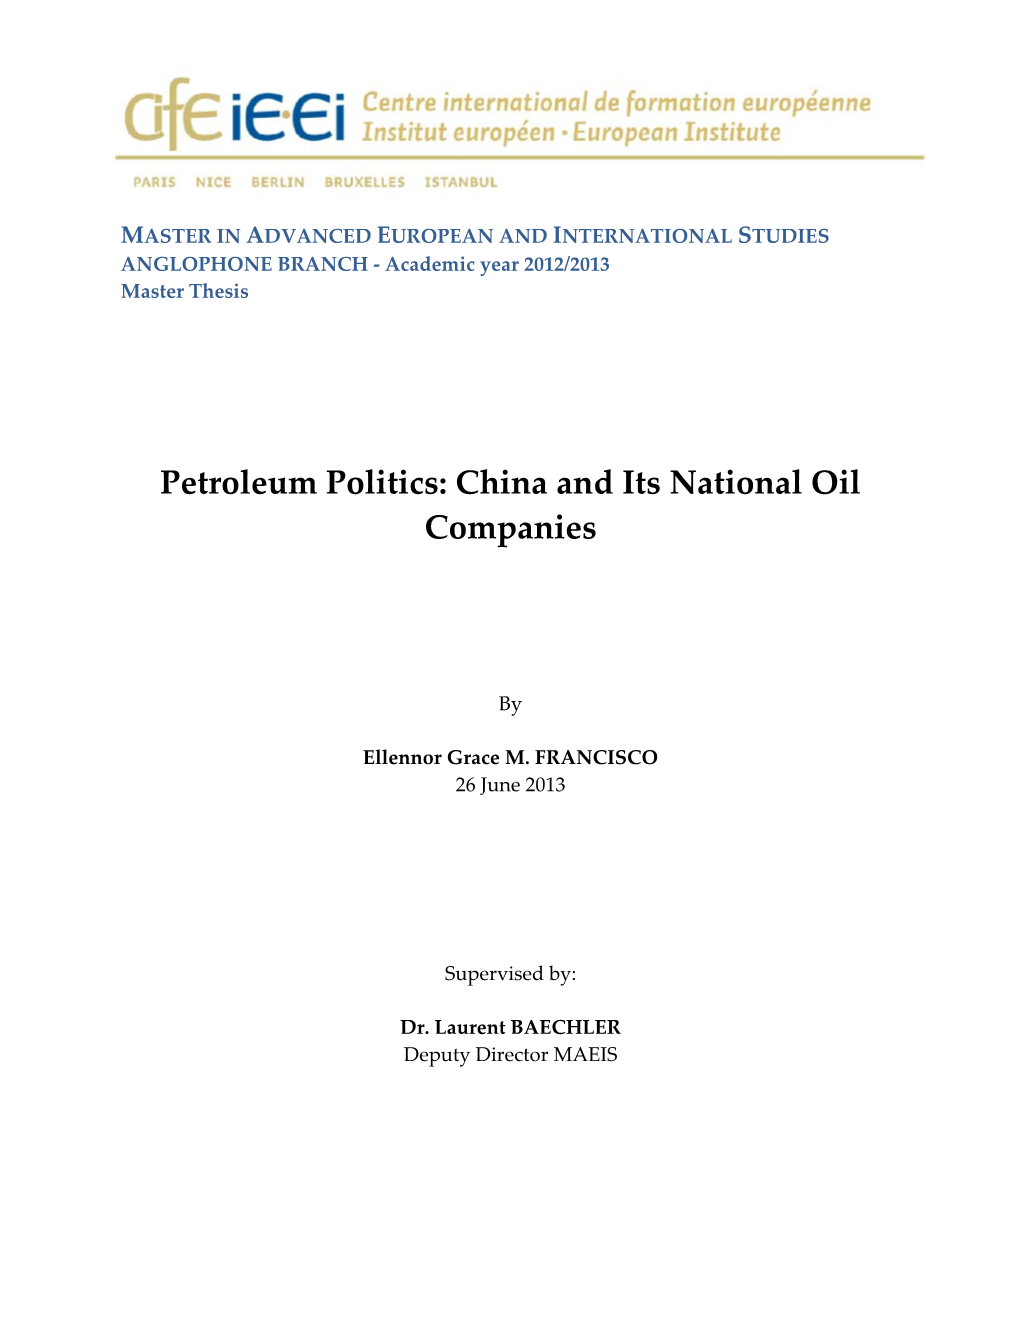 Petroleum Politics: China and Its National Oil Companies